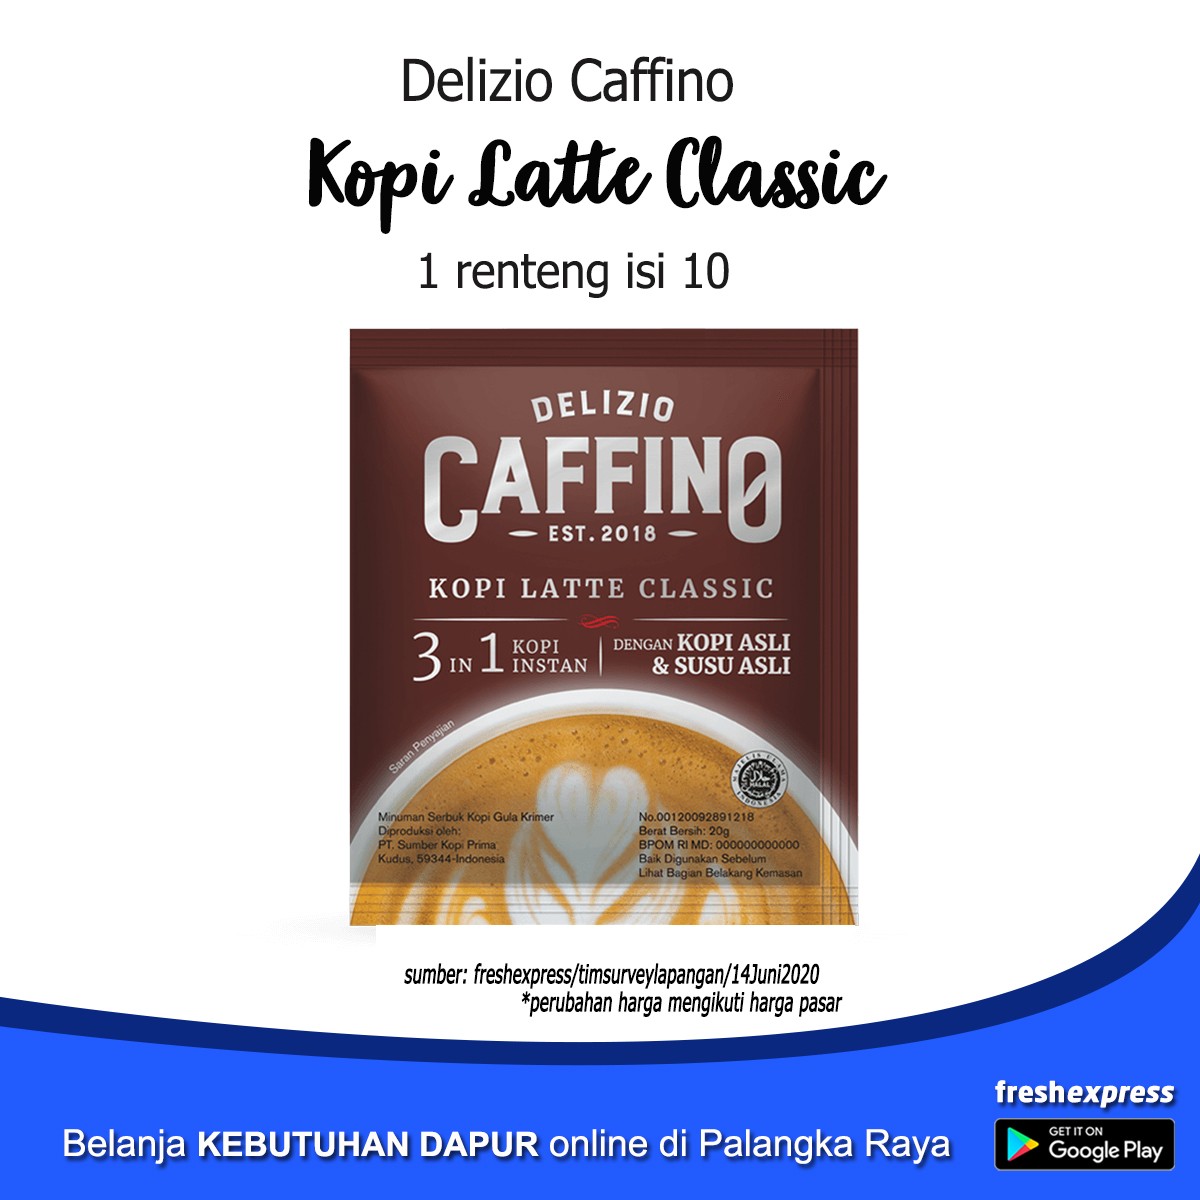 Delizio Caffino Kopi Latte Classic Isi 10